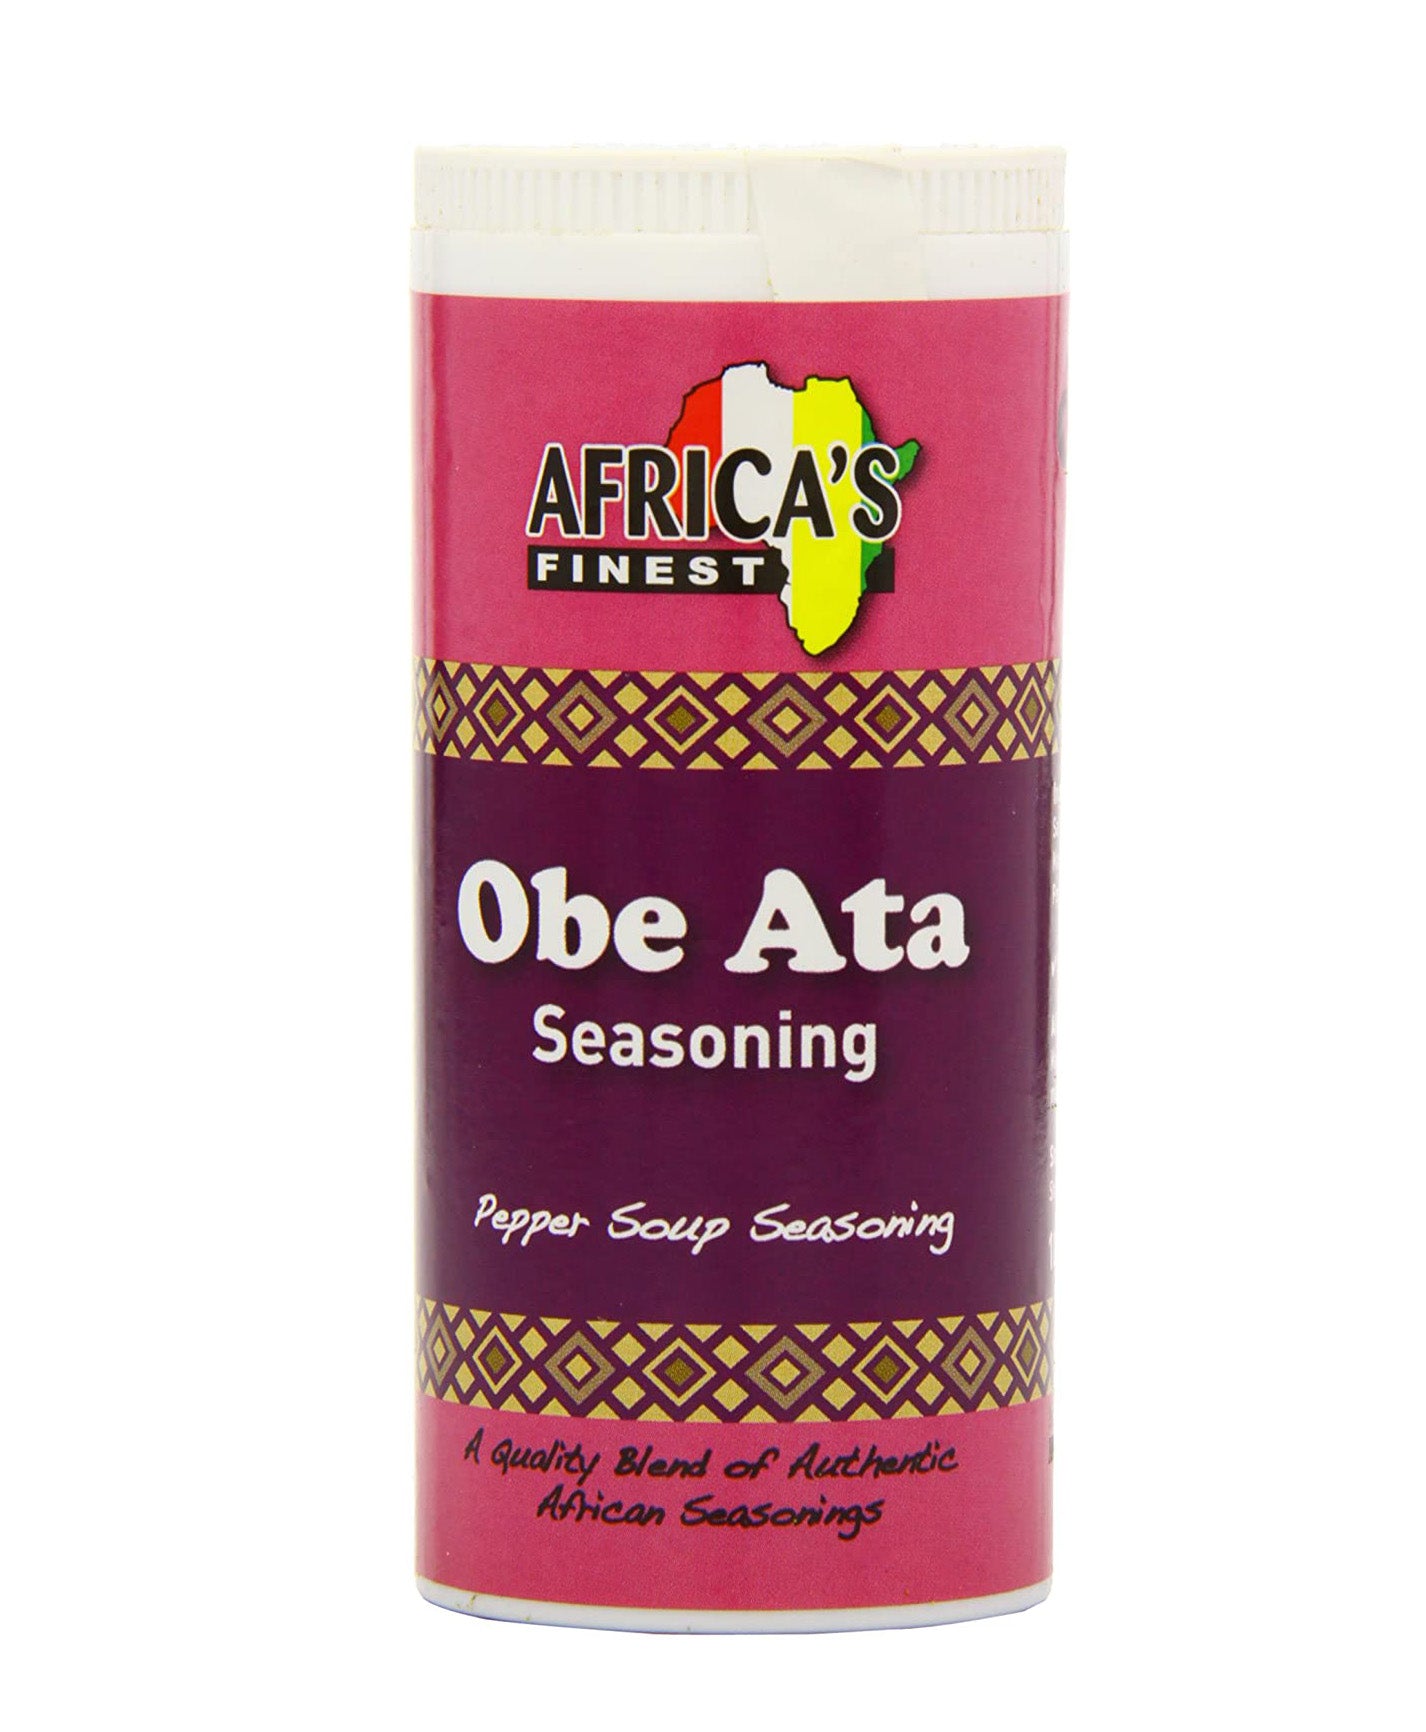 Africa’s Finest Obe Ata Seasoning 100g